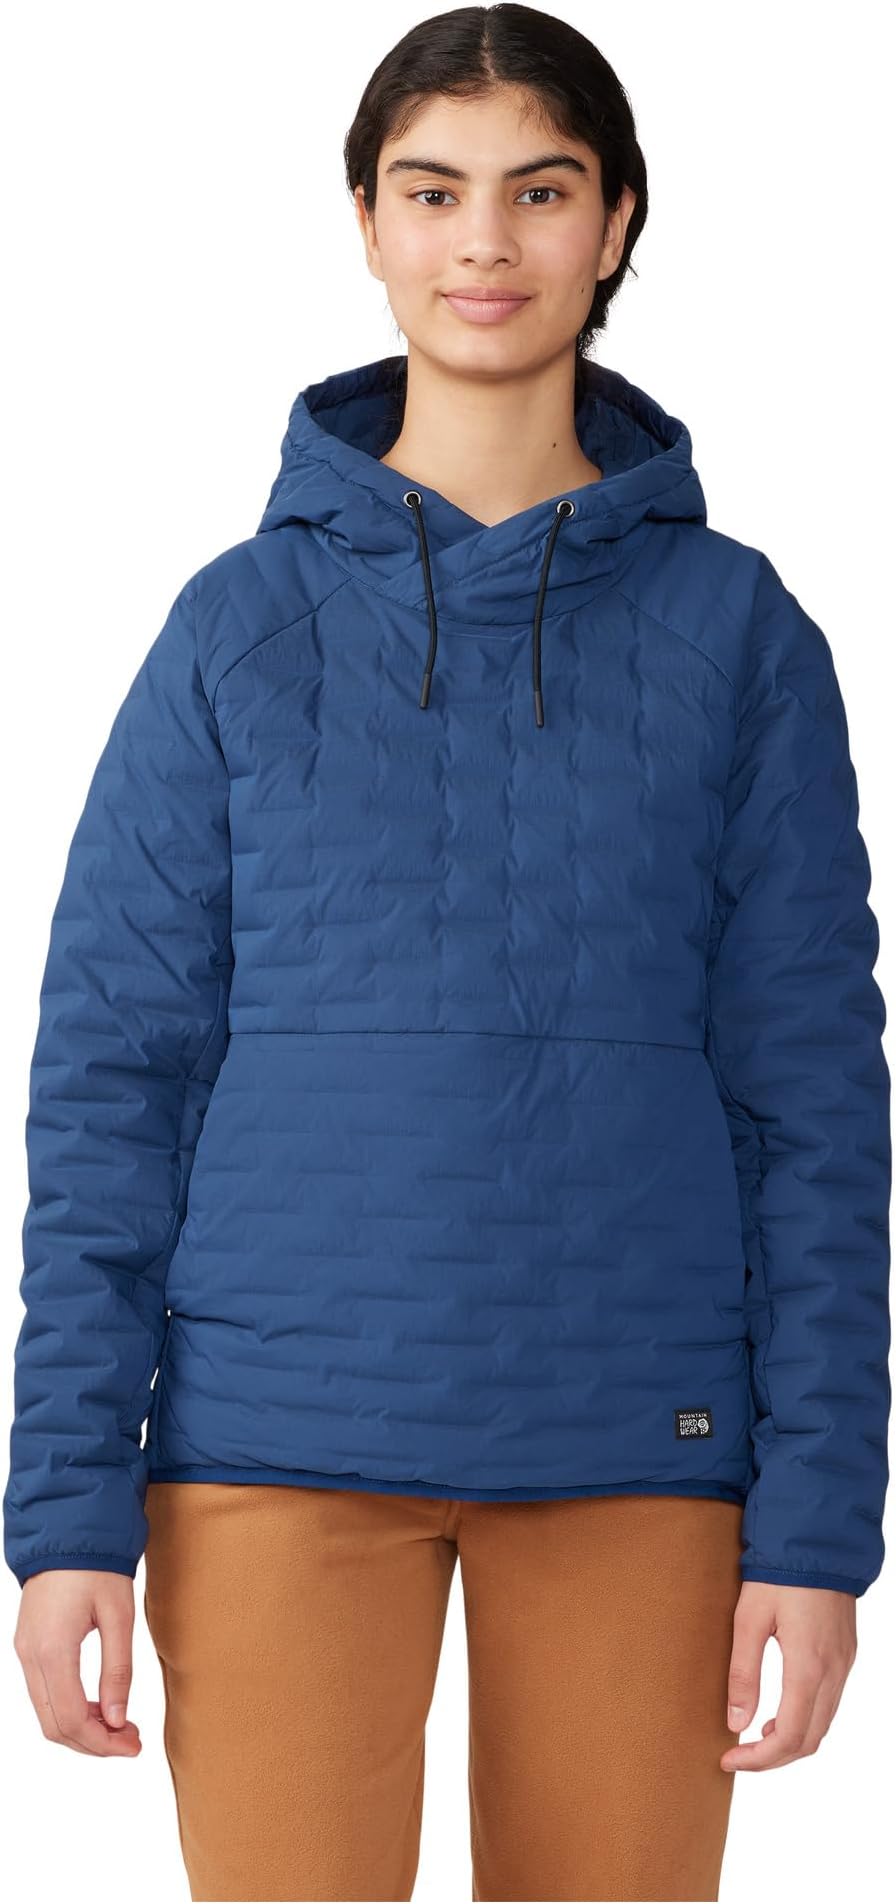 Легкий пуловер с капюшоном Stretchdown Mountain Hardwear, цвет Outer Dark